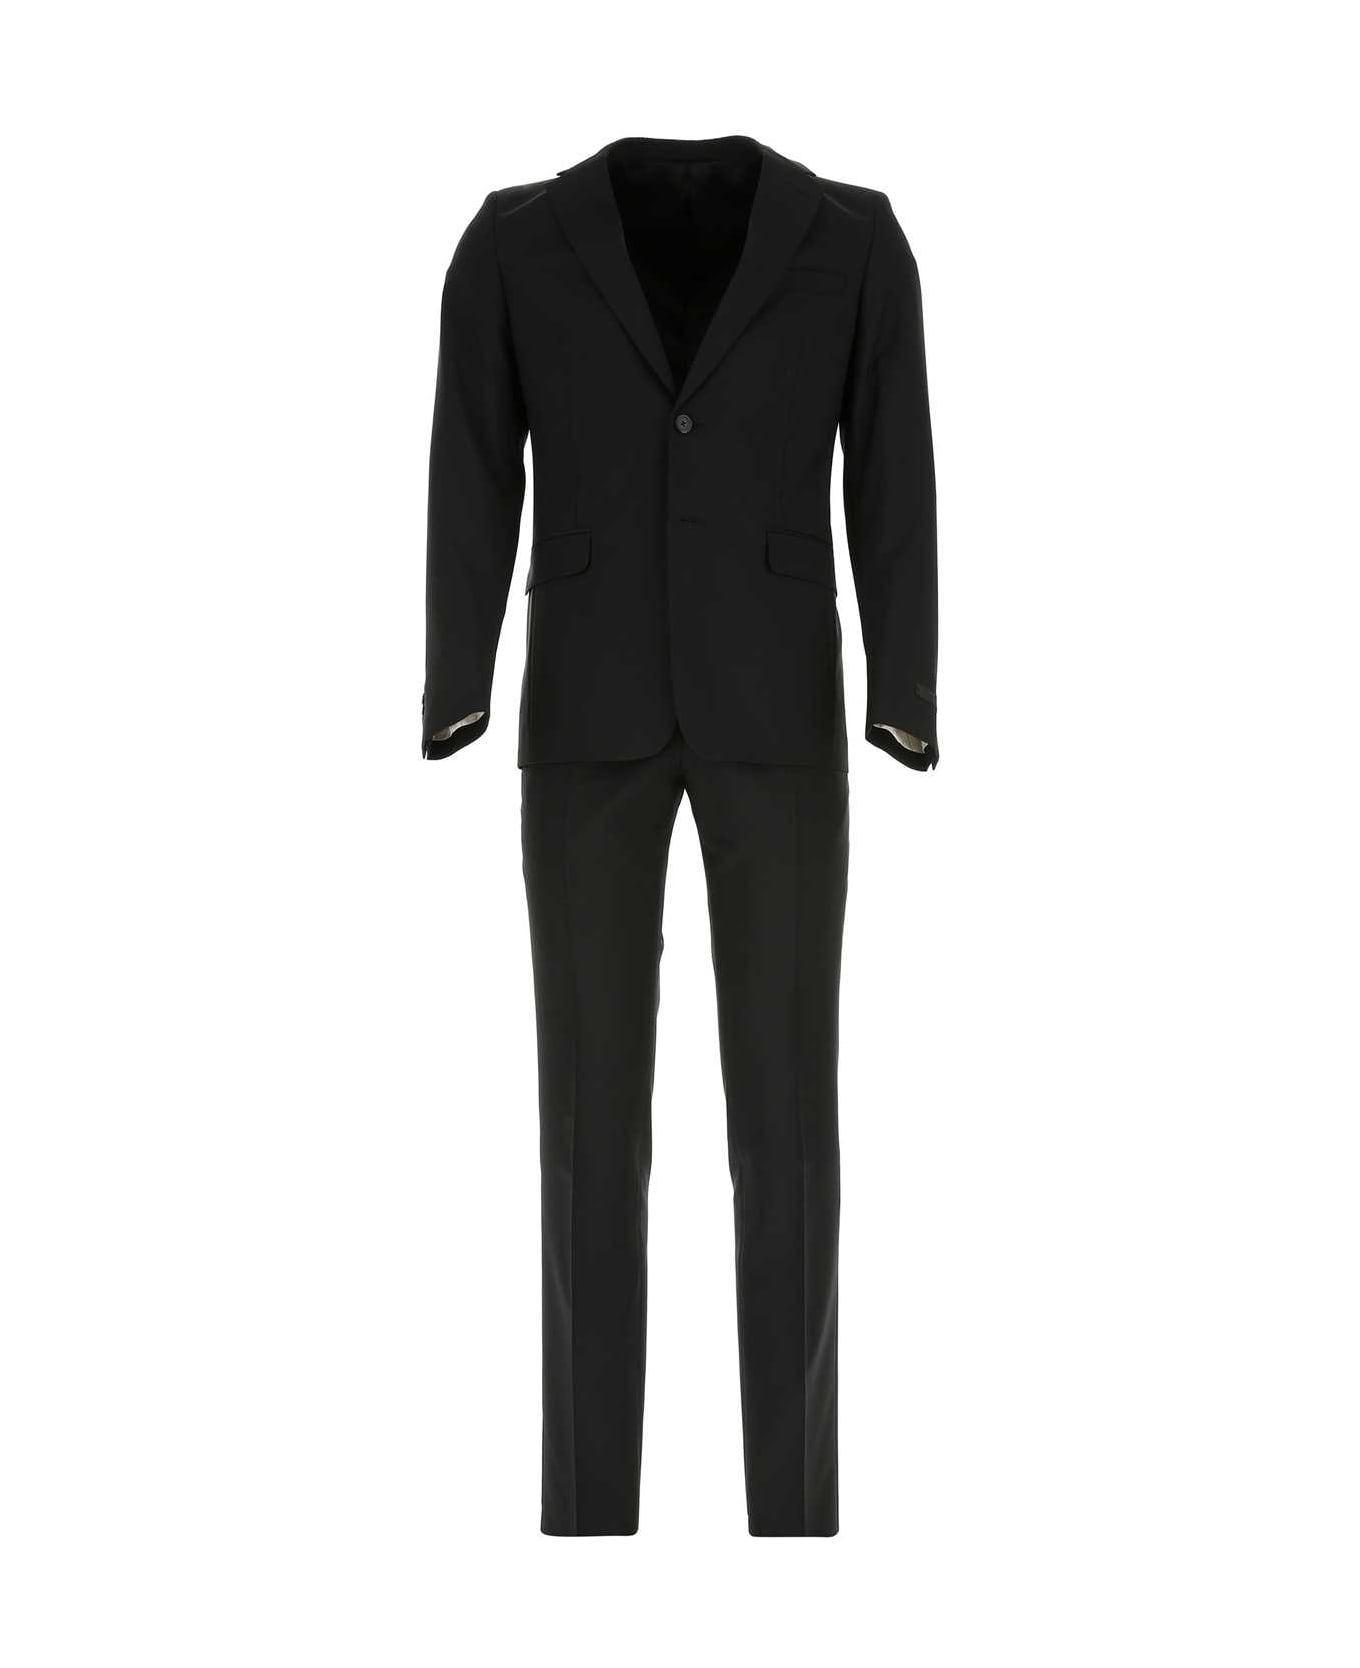 Prada Black Wool Blend Suit - NERO スーツ